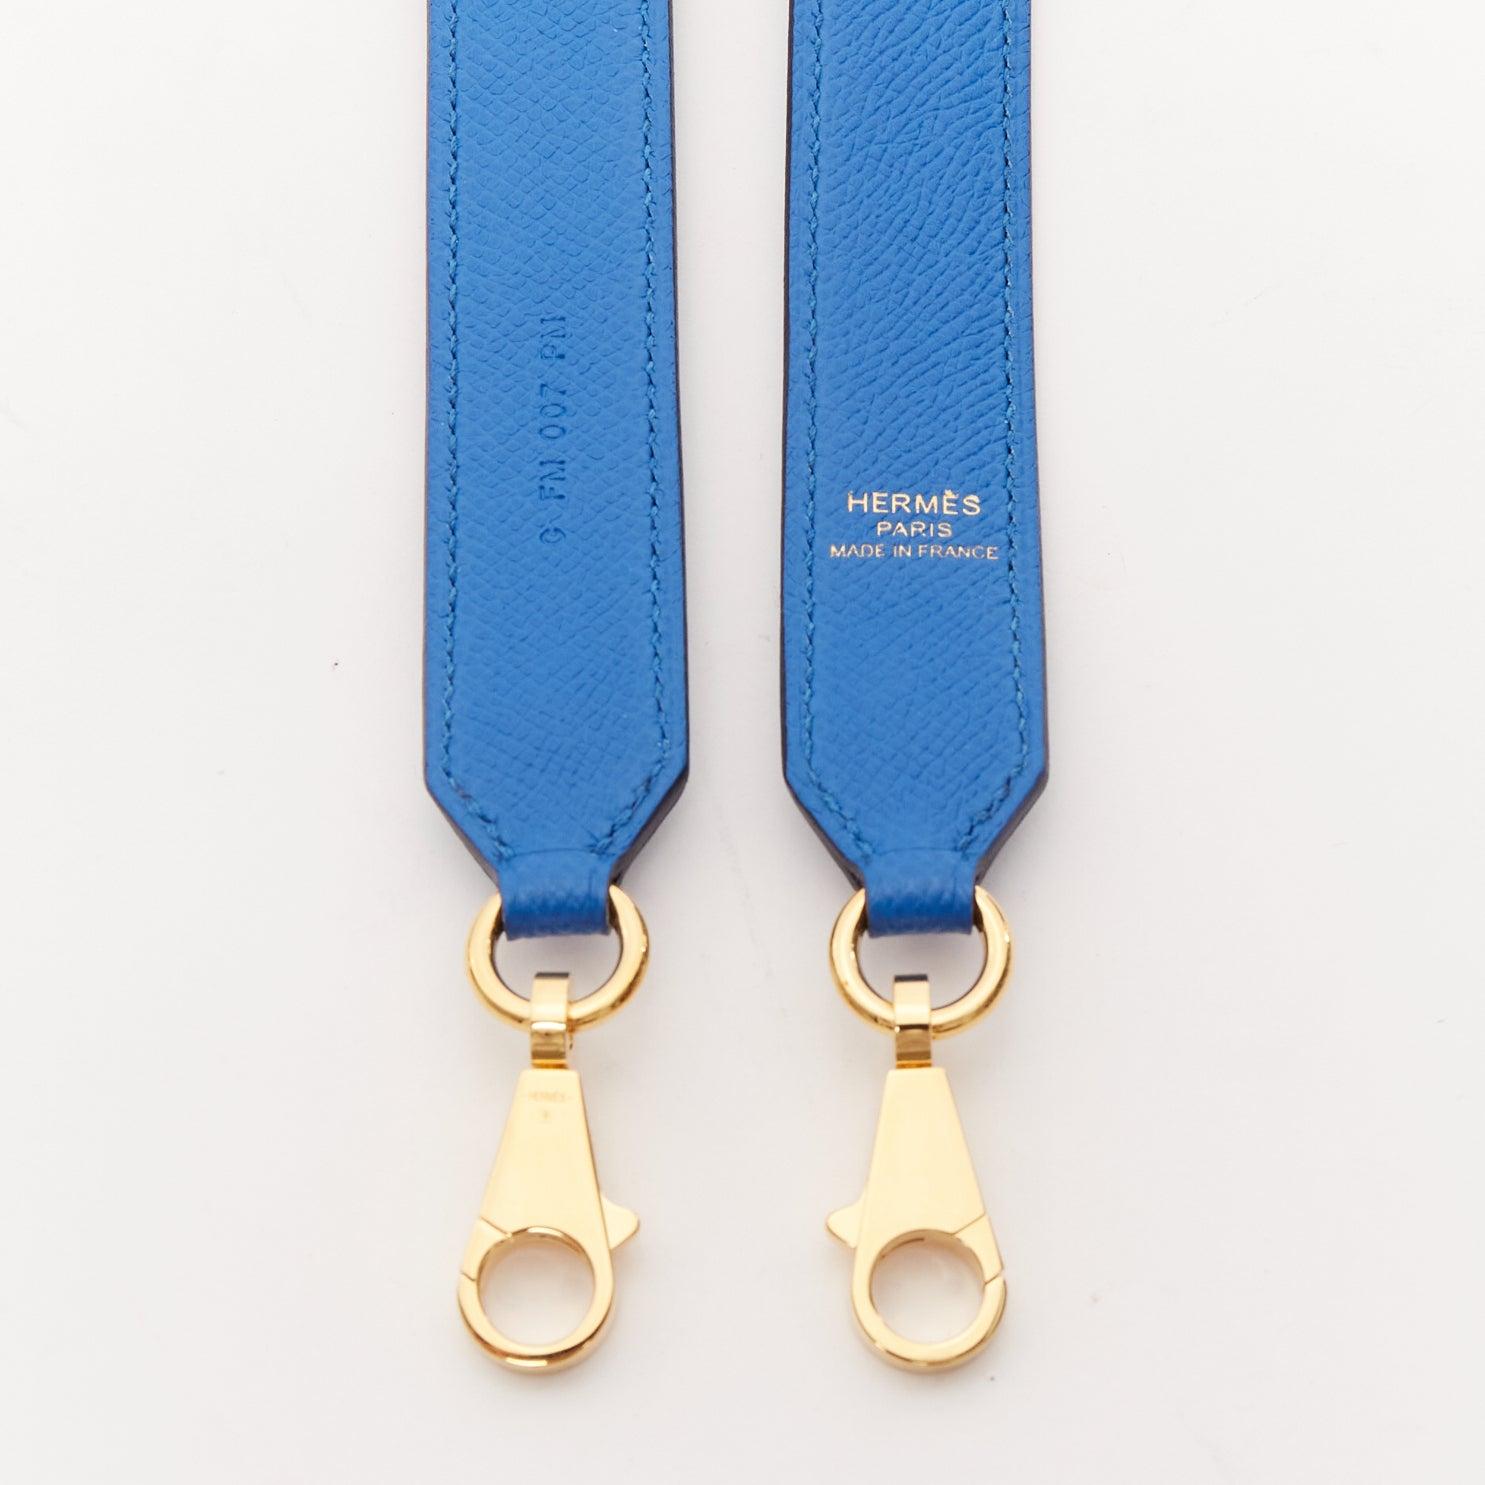 HERMES Sangle 25 blau braun gewebtes Leder goldene Hardware Tasche Riemen Damen im Angebot